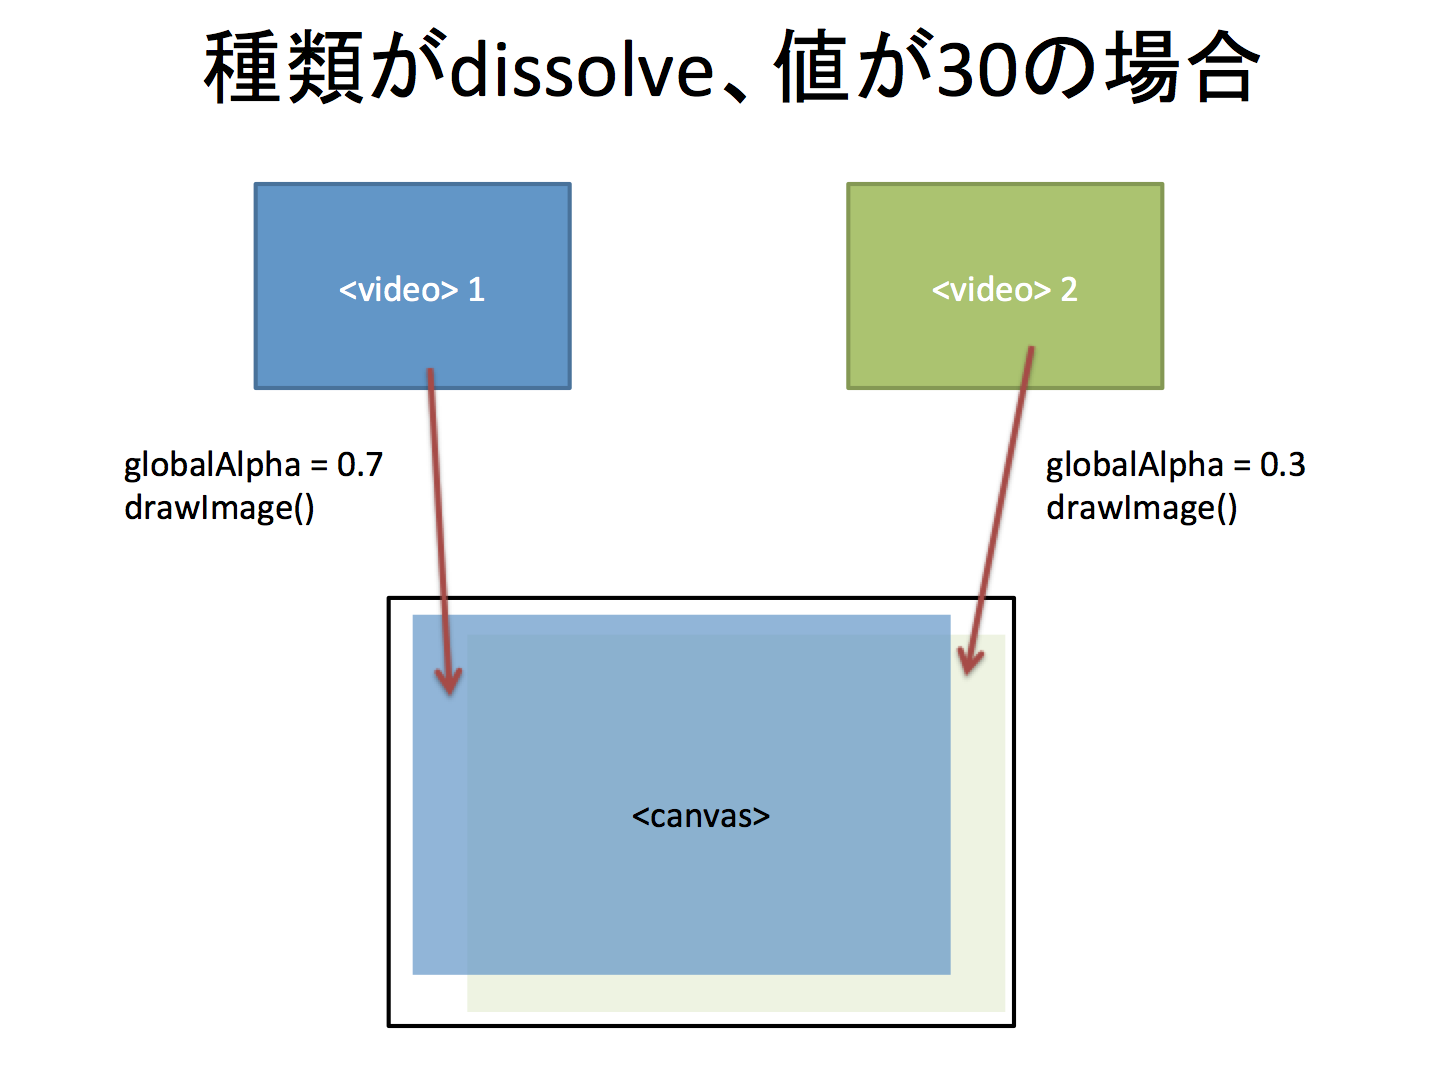 dissolve30.png